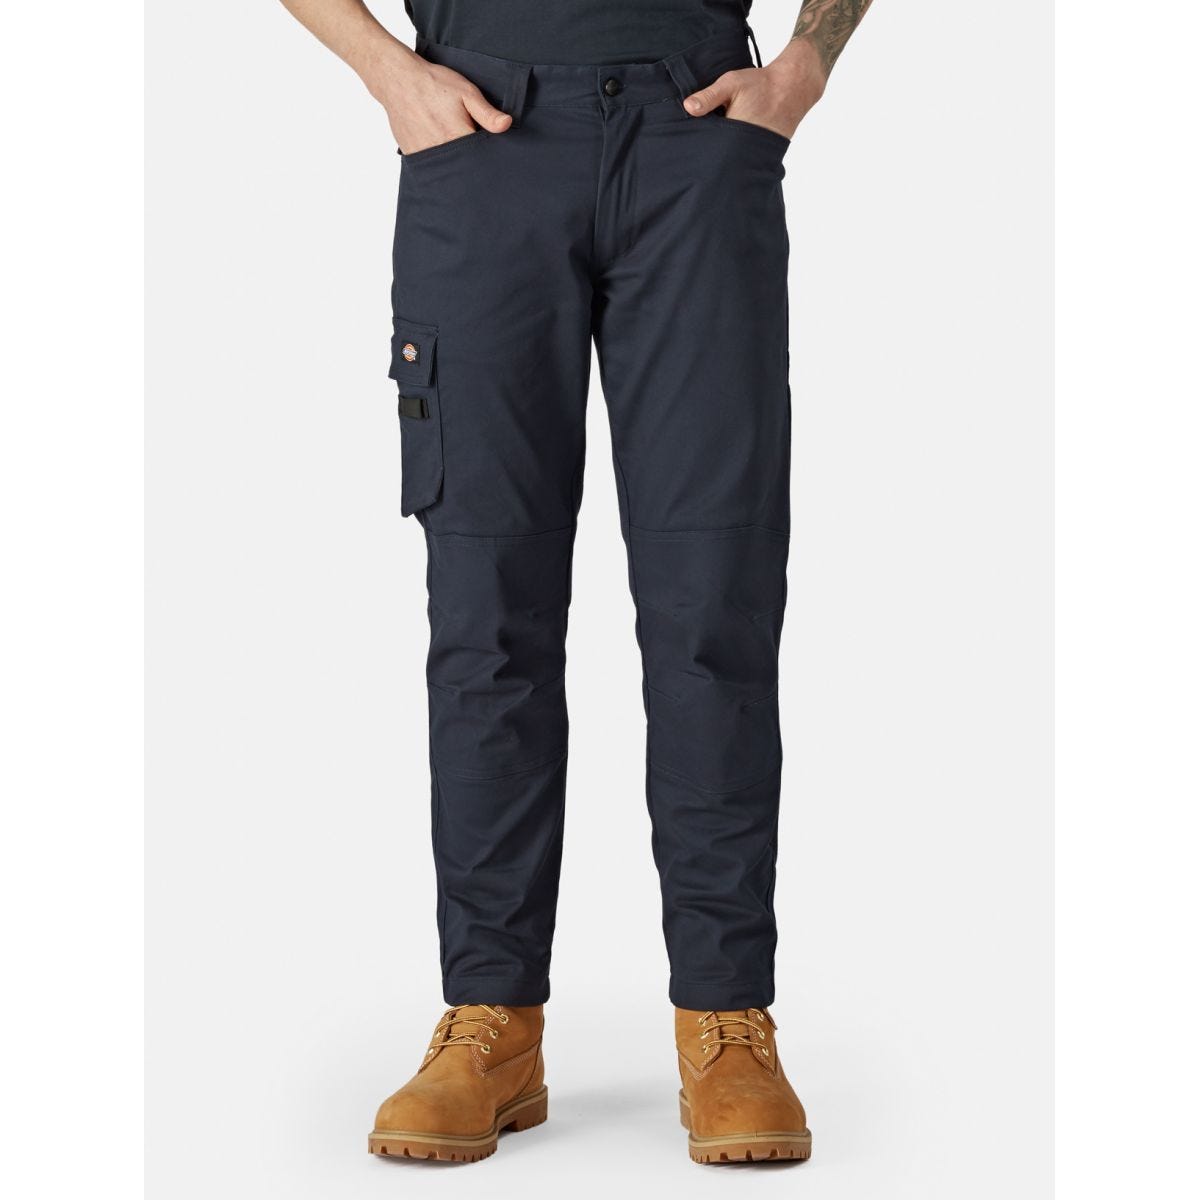 Pantalon Lead In Flex Bleu marine - Dickies - Taille 48 1